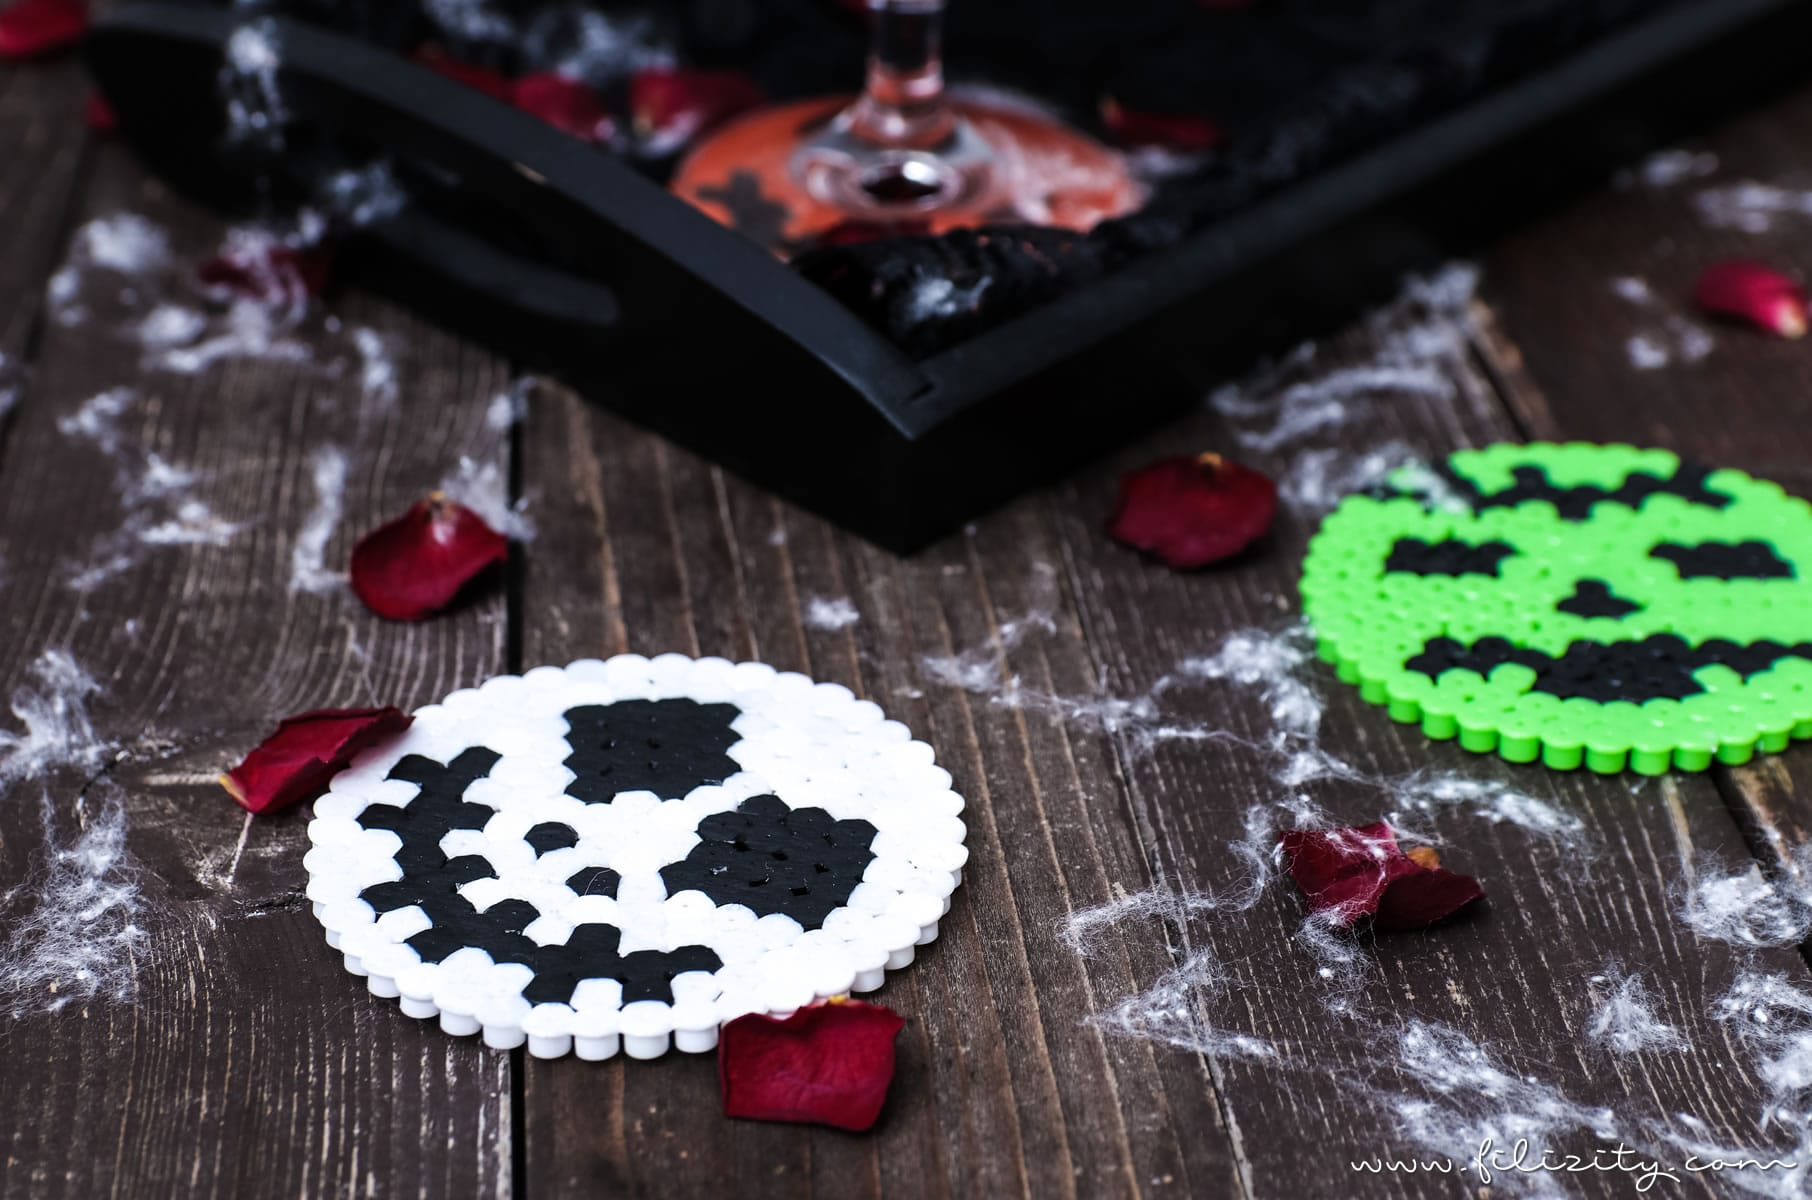 DIY Halloween Deko: Bügelperlen-Glasuntersetzer Jack Skellington, Frankensteins Monster & Kürbis | Filizity.com | DIY-Blog aus dem Rheinland #halloween #booh